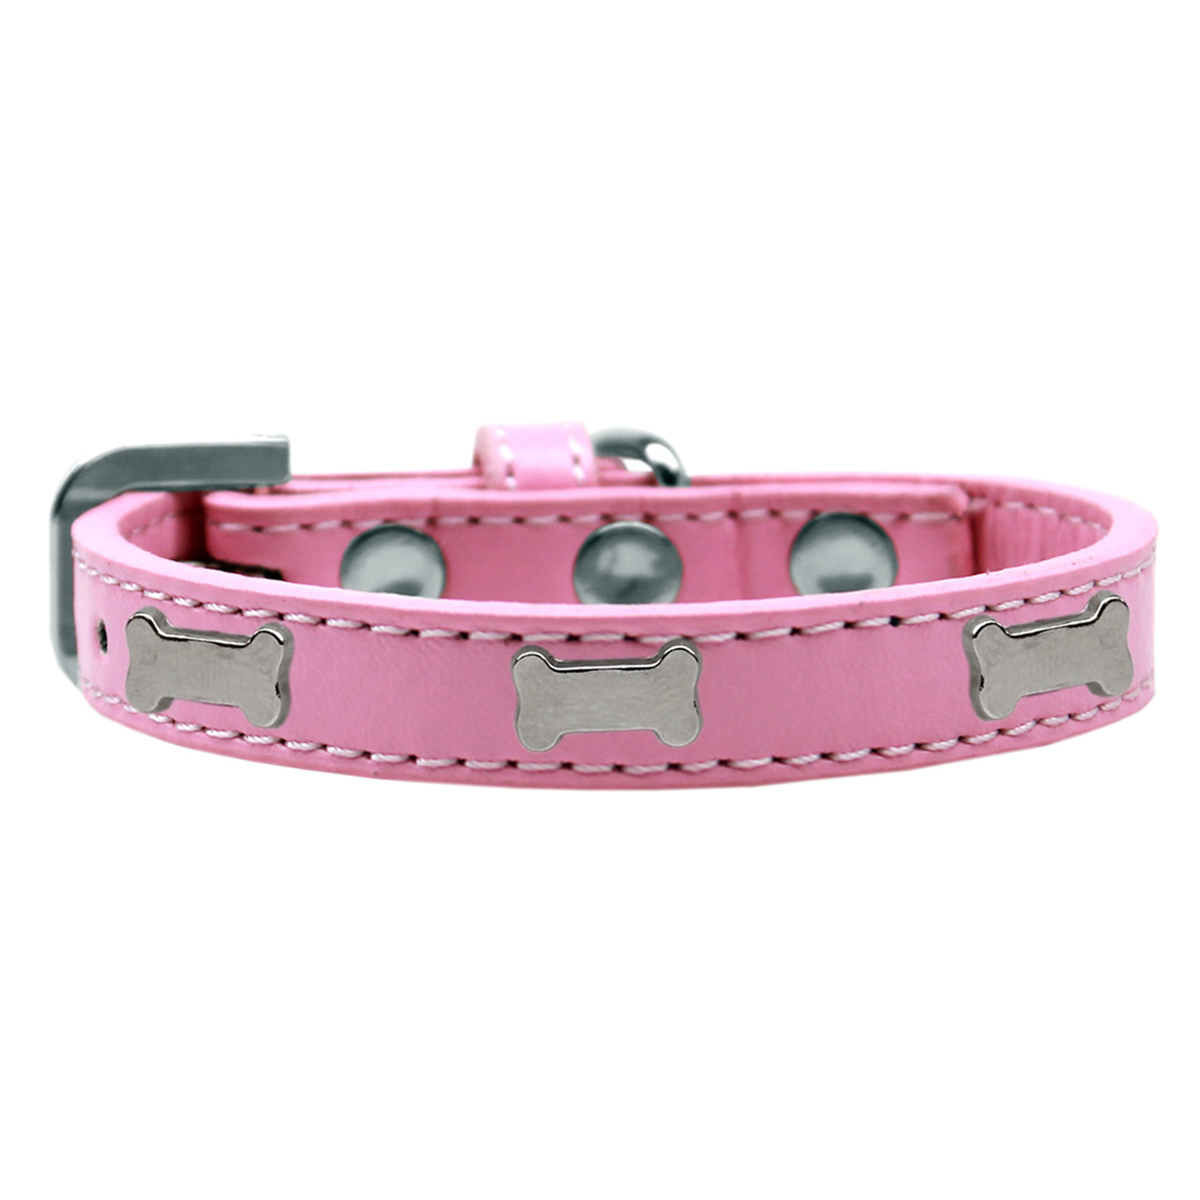 Silver Bone Widget Dog Collar, Light Pink - Size 18